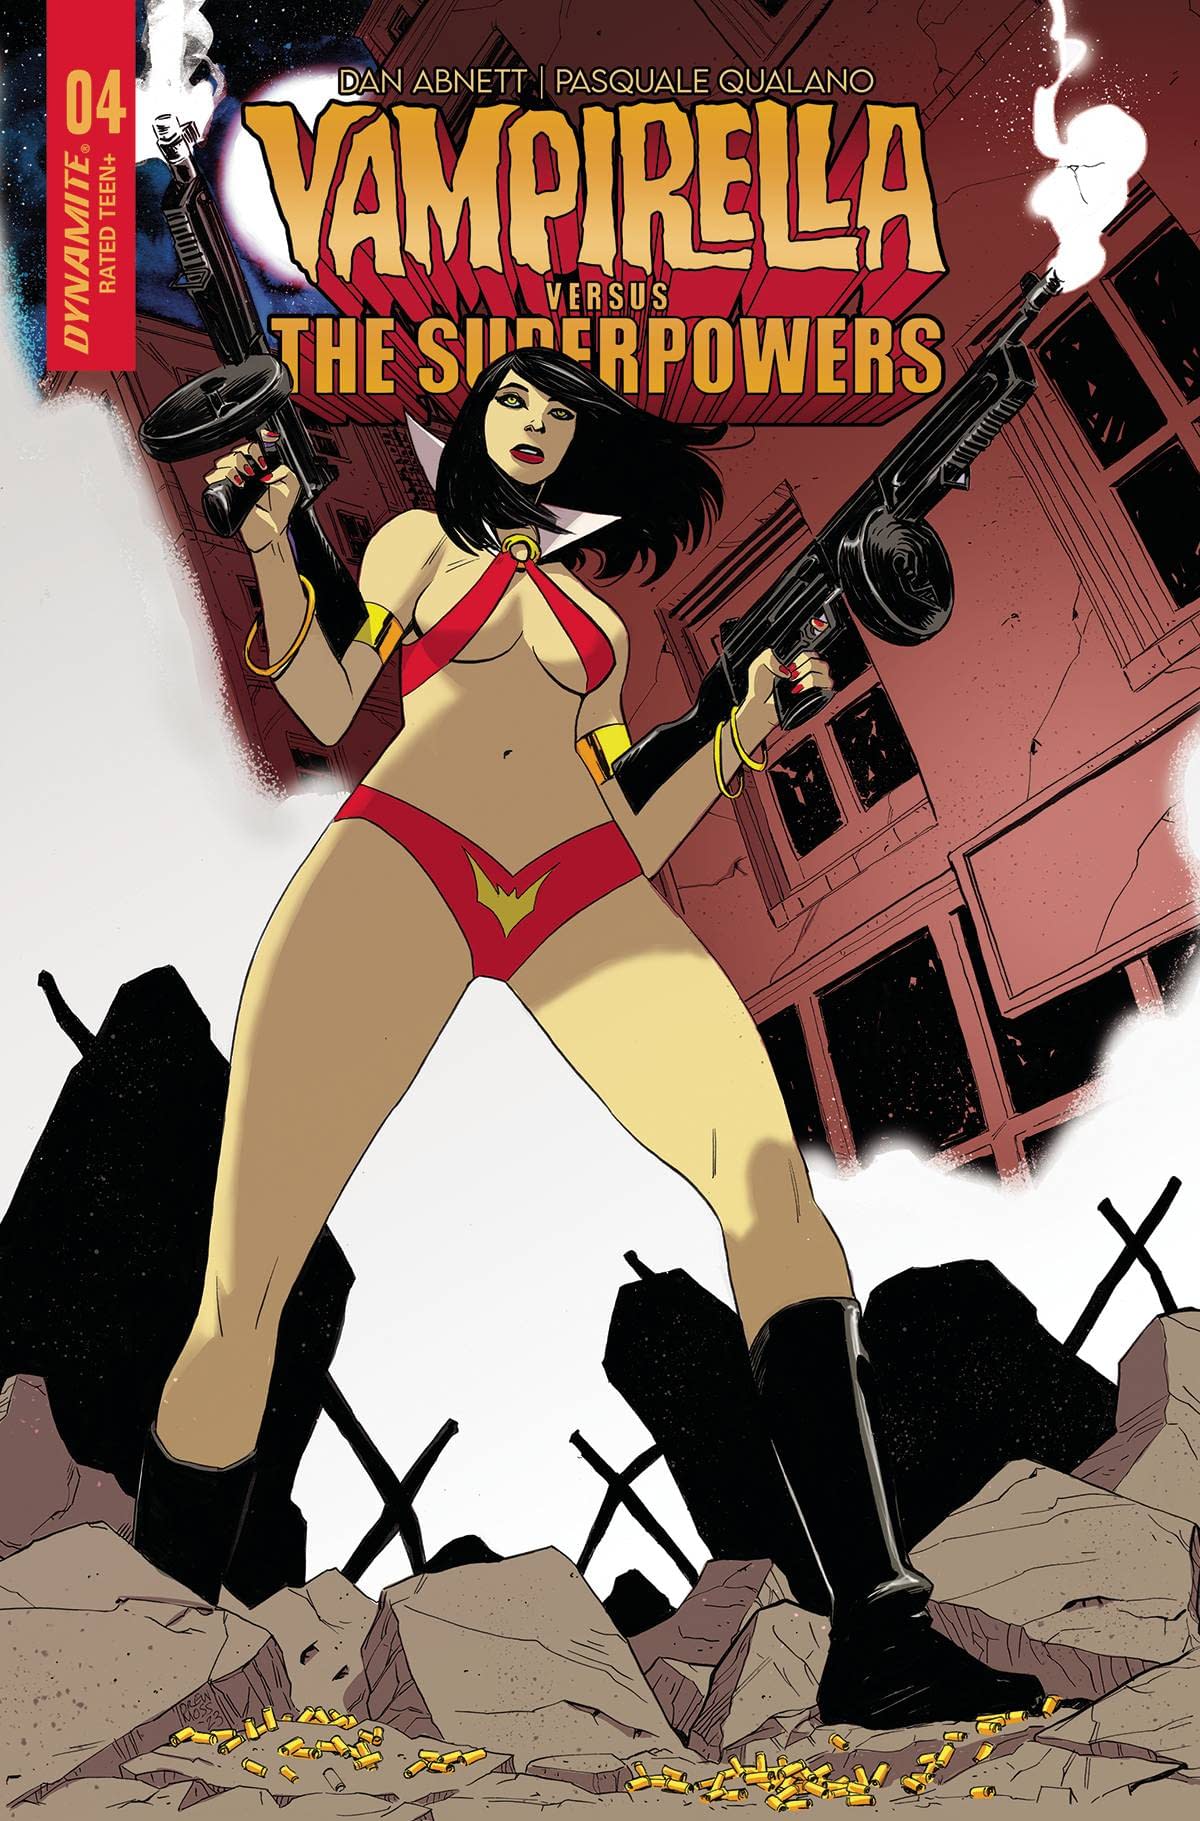 Cover image for VAMPIRELLA VS SUPERPOWERS #4 CVR C MOSS